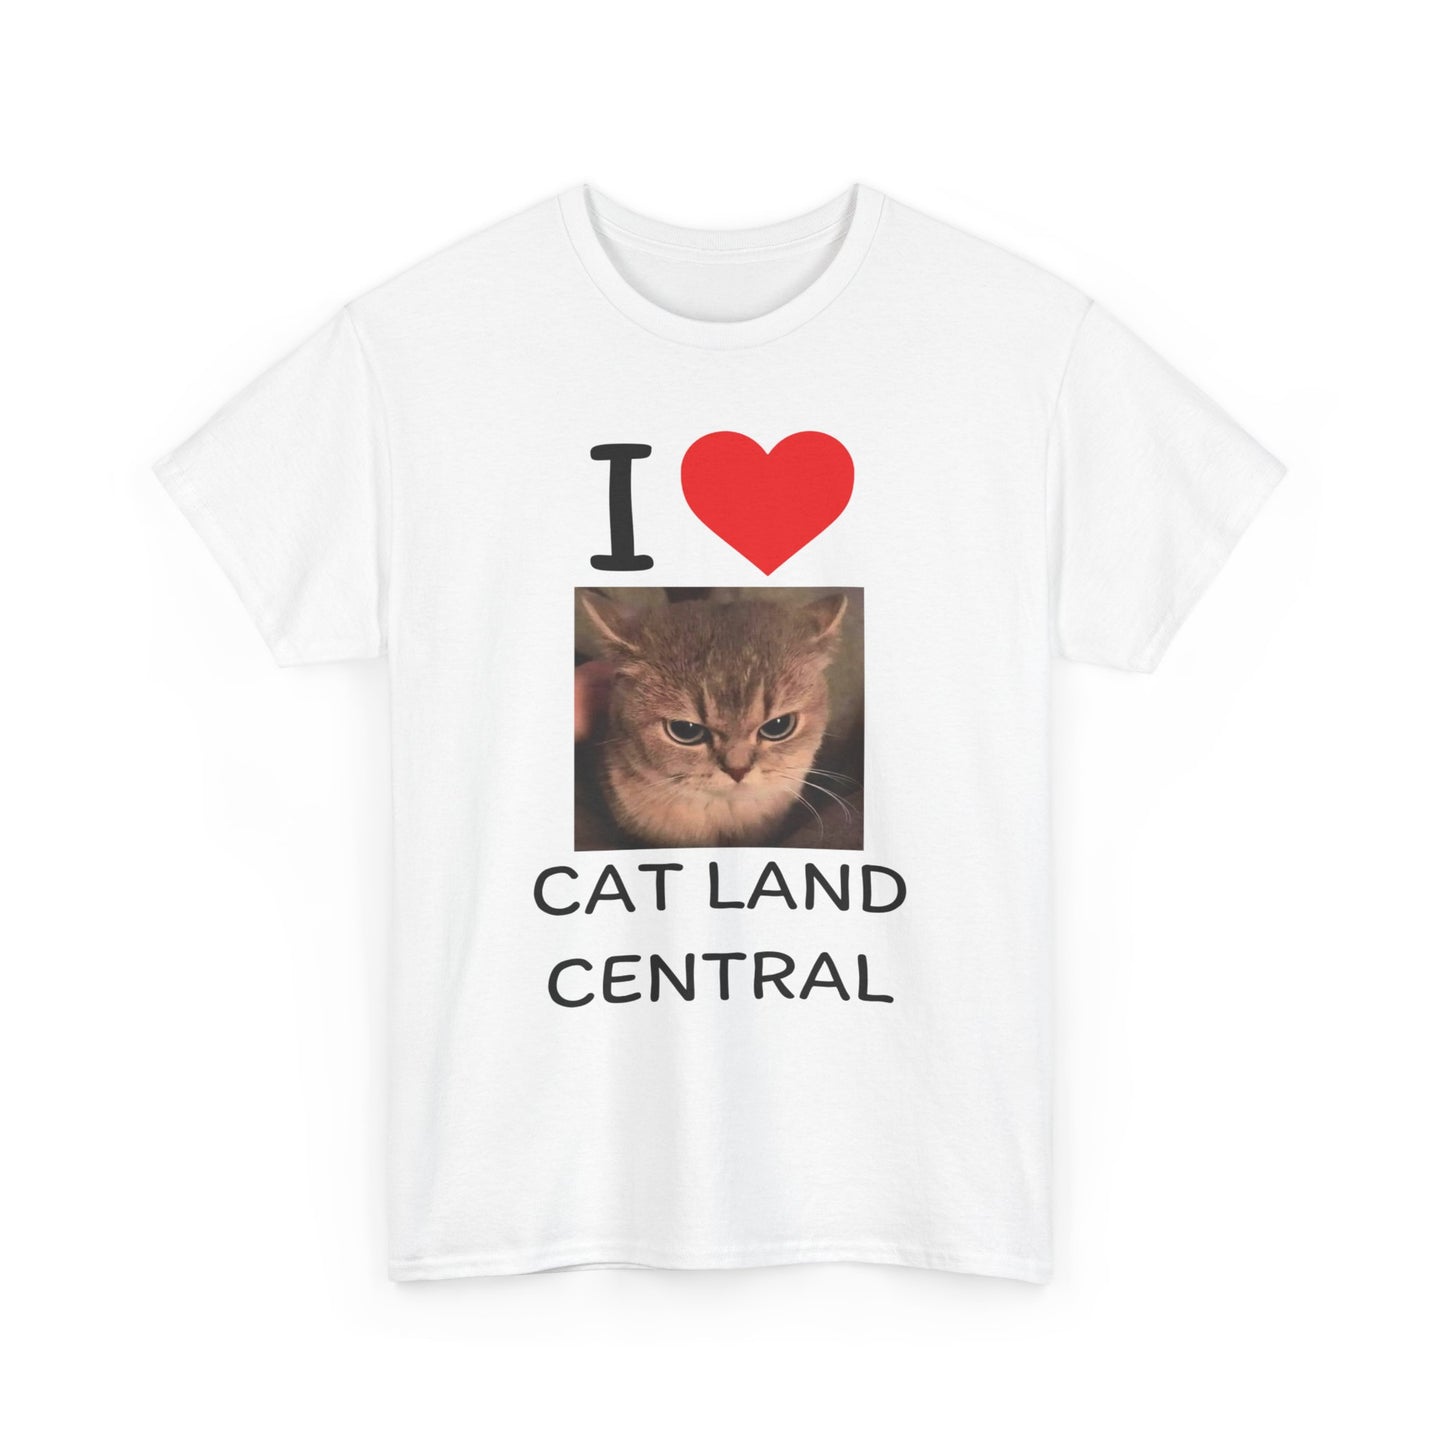 I LOVE CAT LAND CENTRAL T-SHIRT